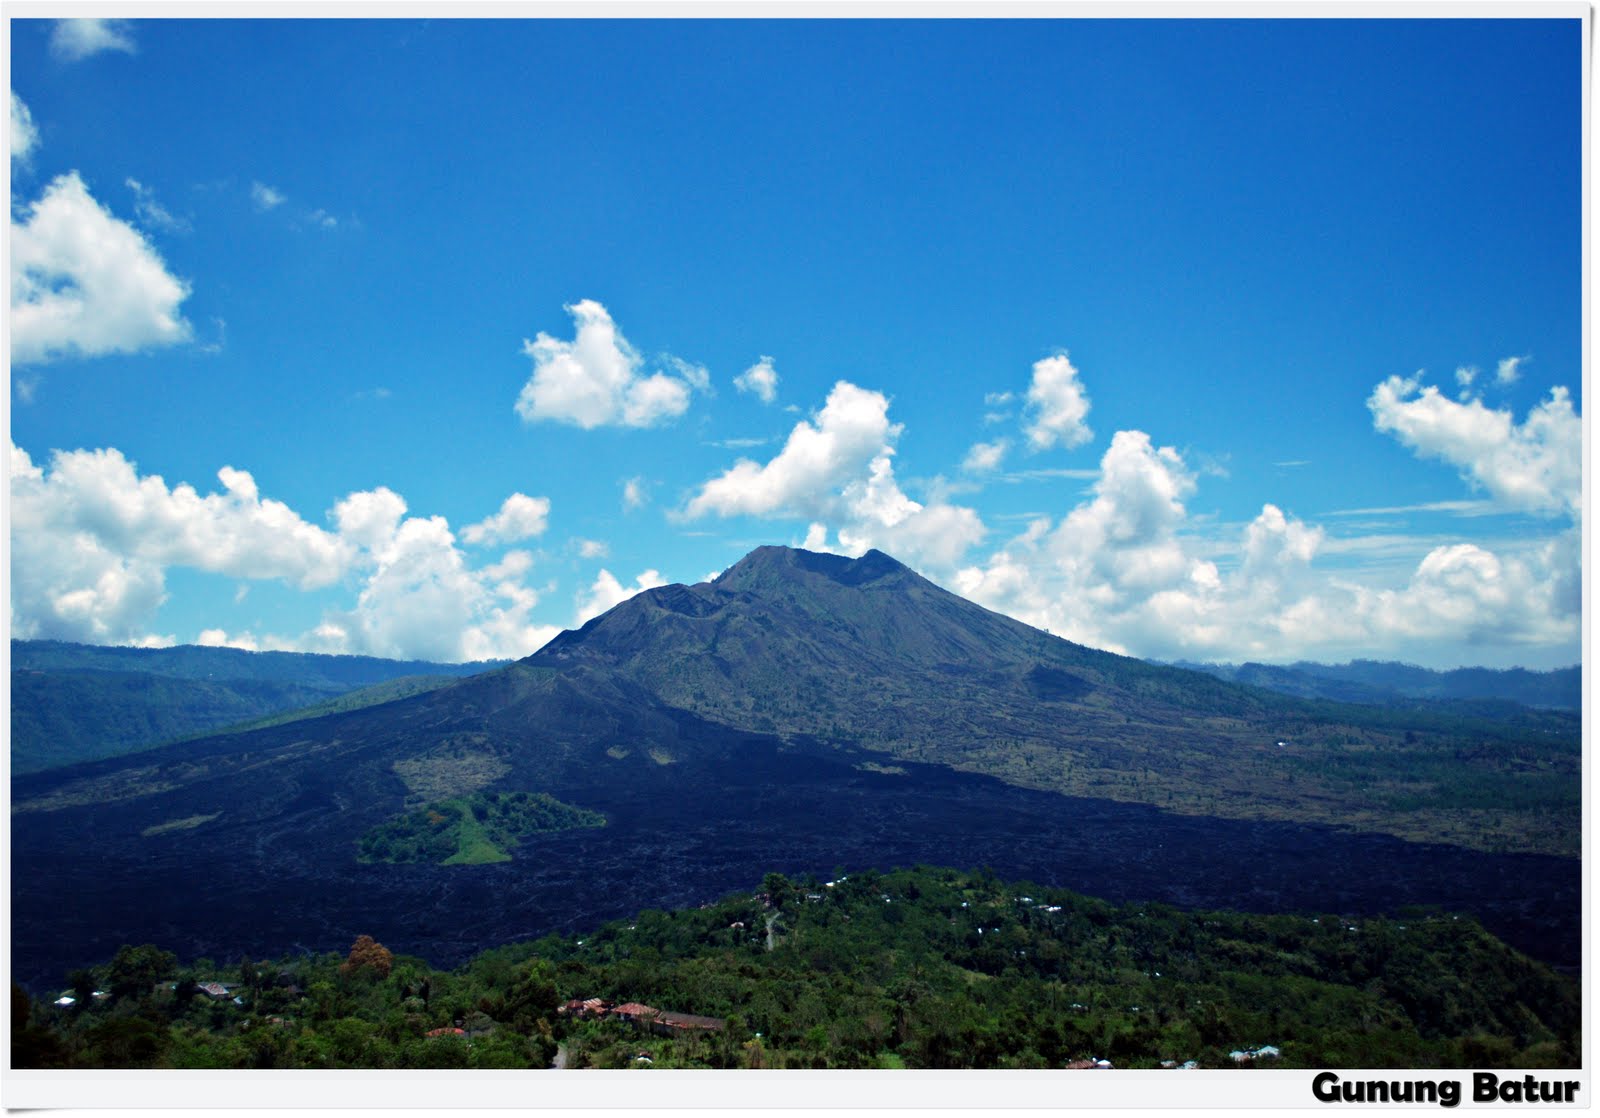 Батур бали. Гунунг-Батур. Гора Батур. Бали вулкан Батур высота. Агунг вулкан Батур восхождение.